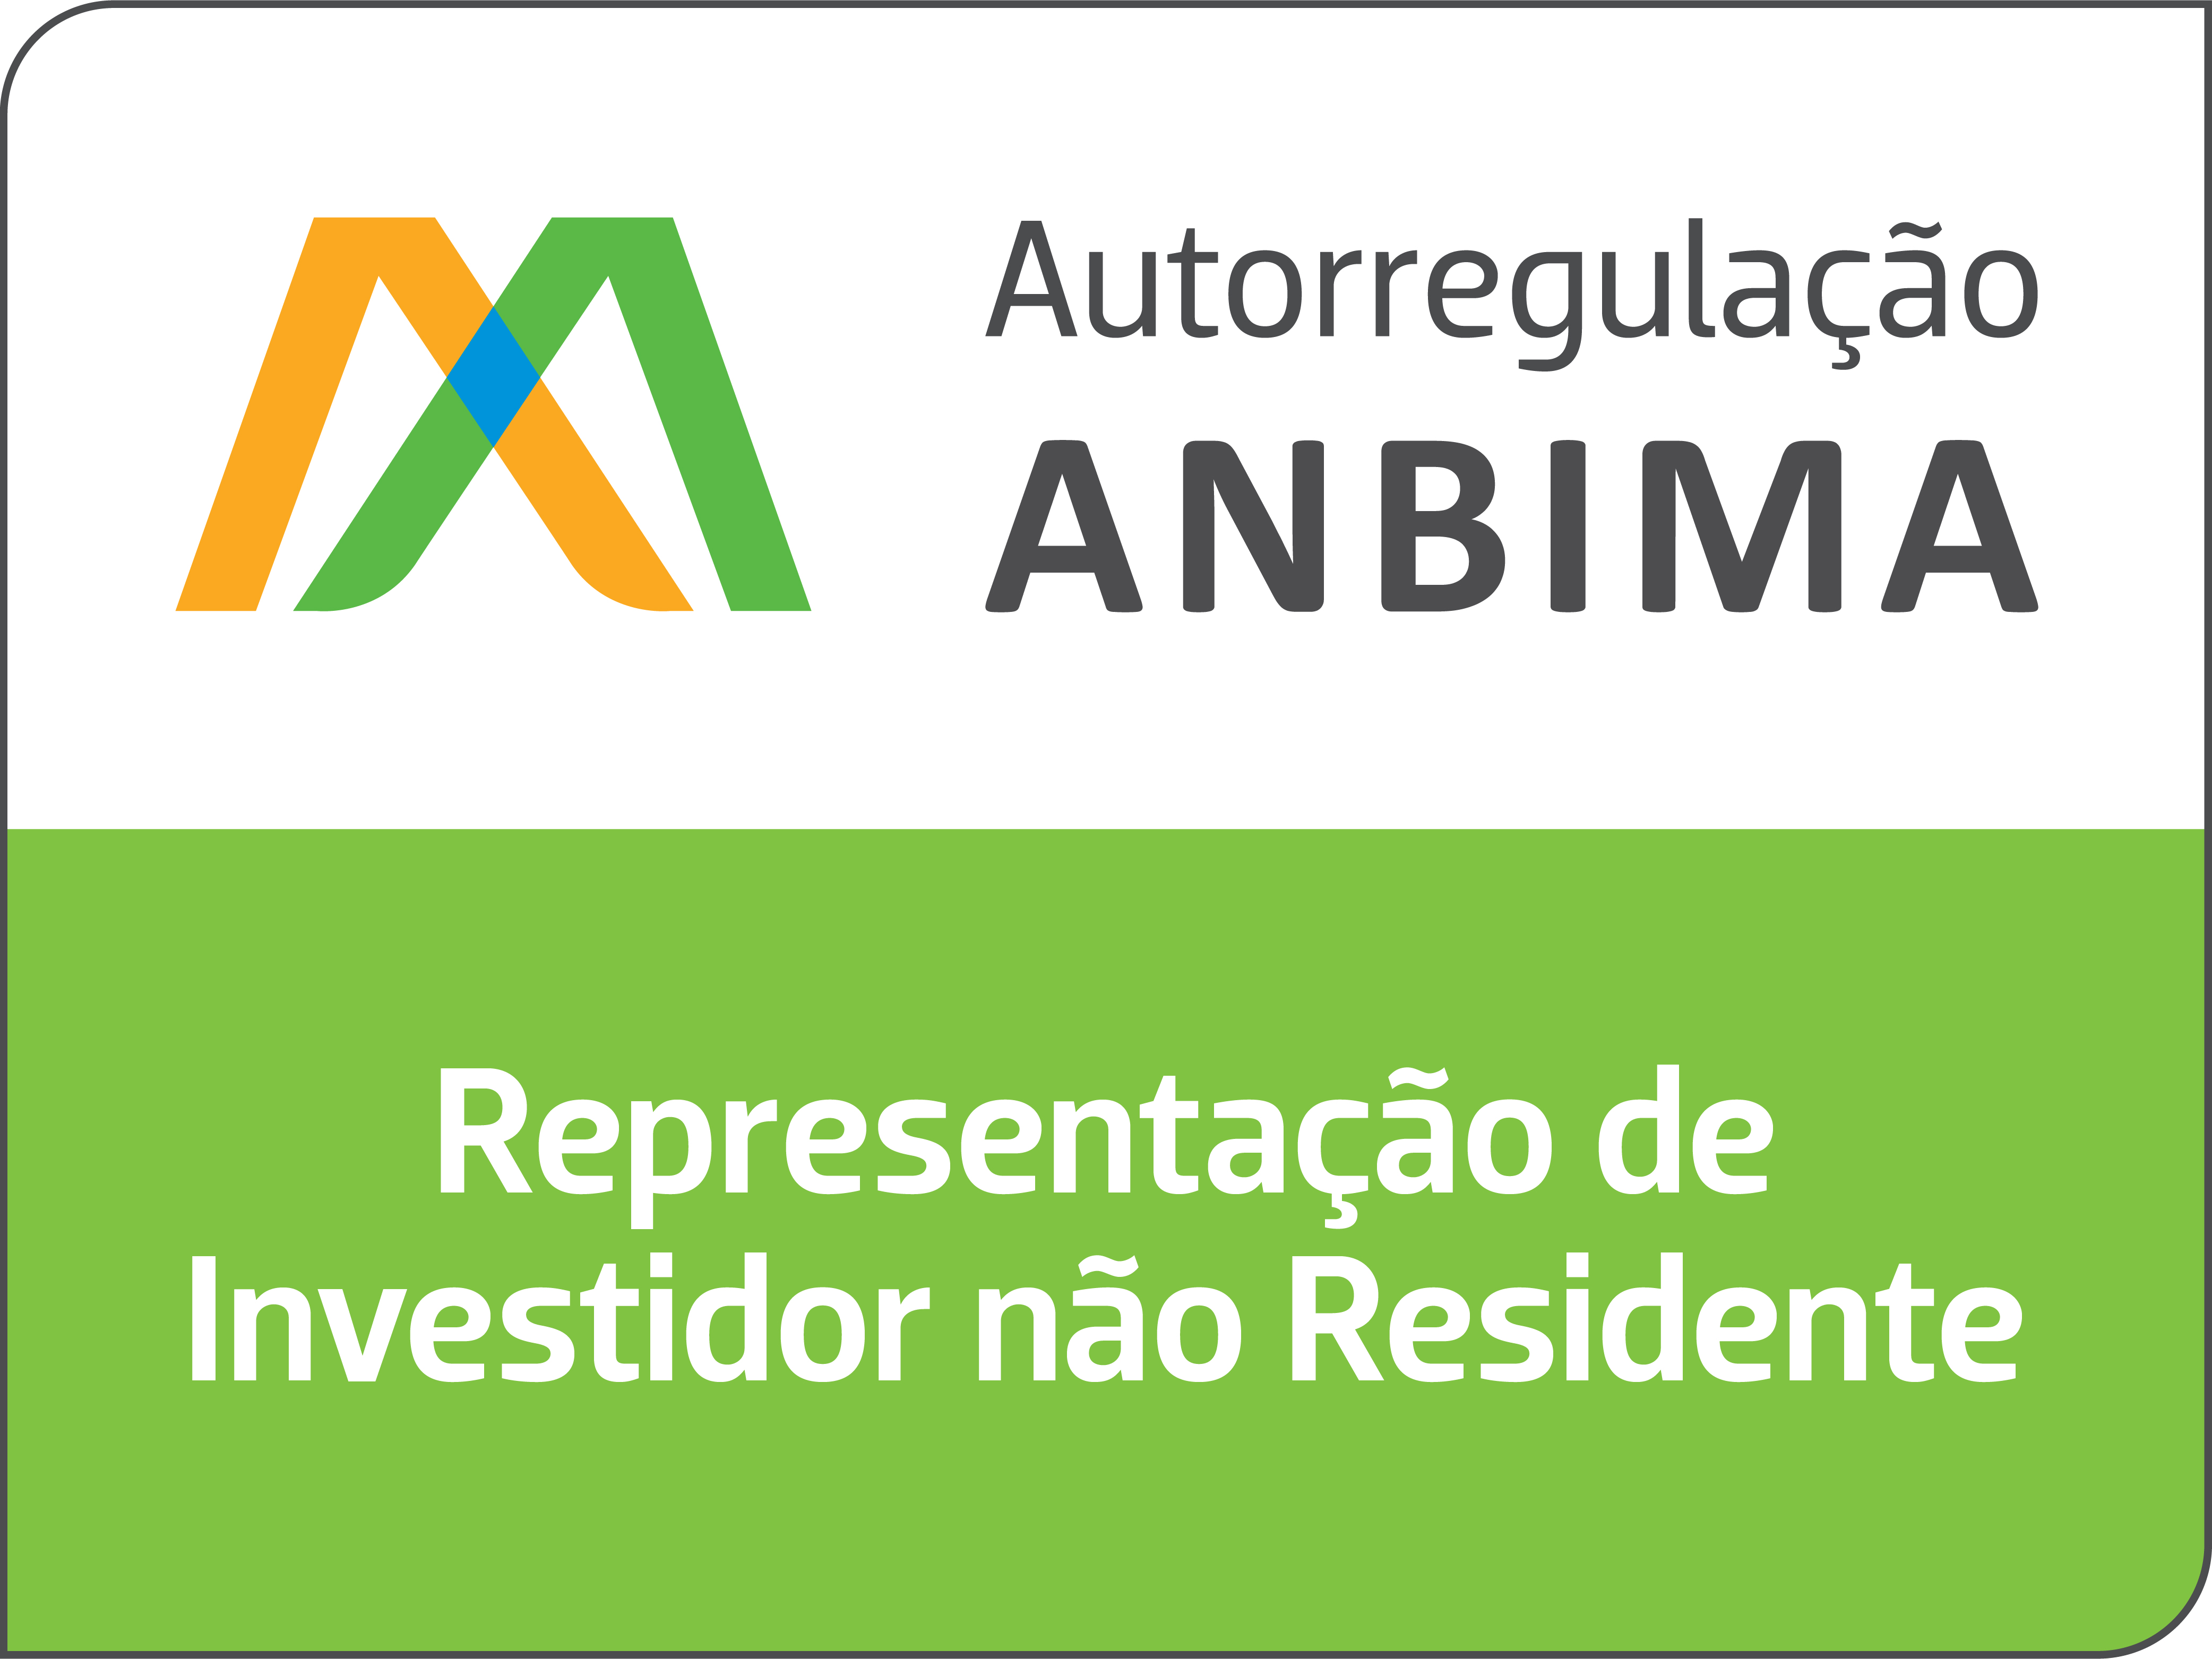 AMBIMA Logo - Representation of a Non-Resident Permanent Investor